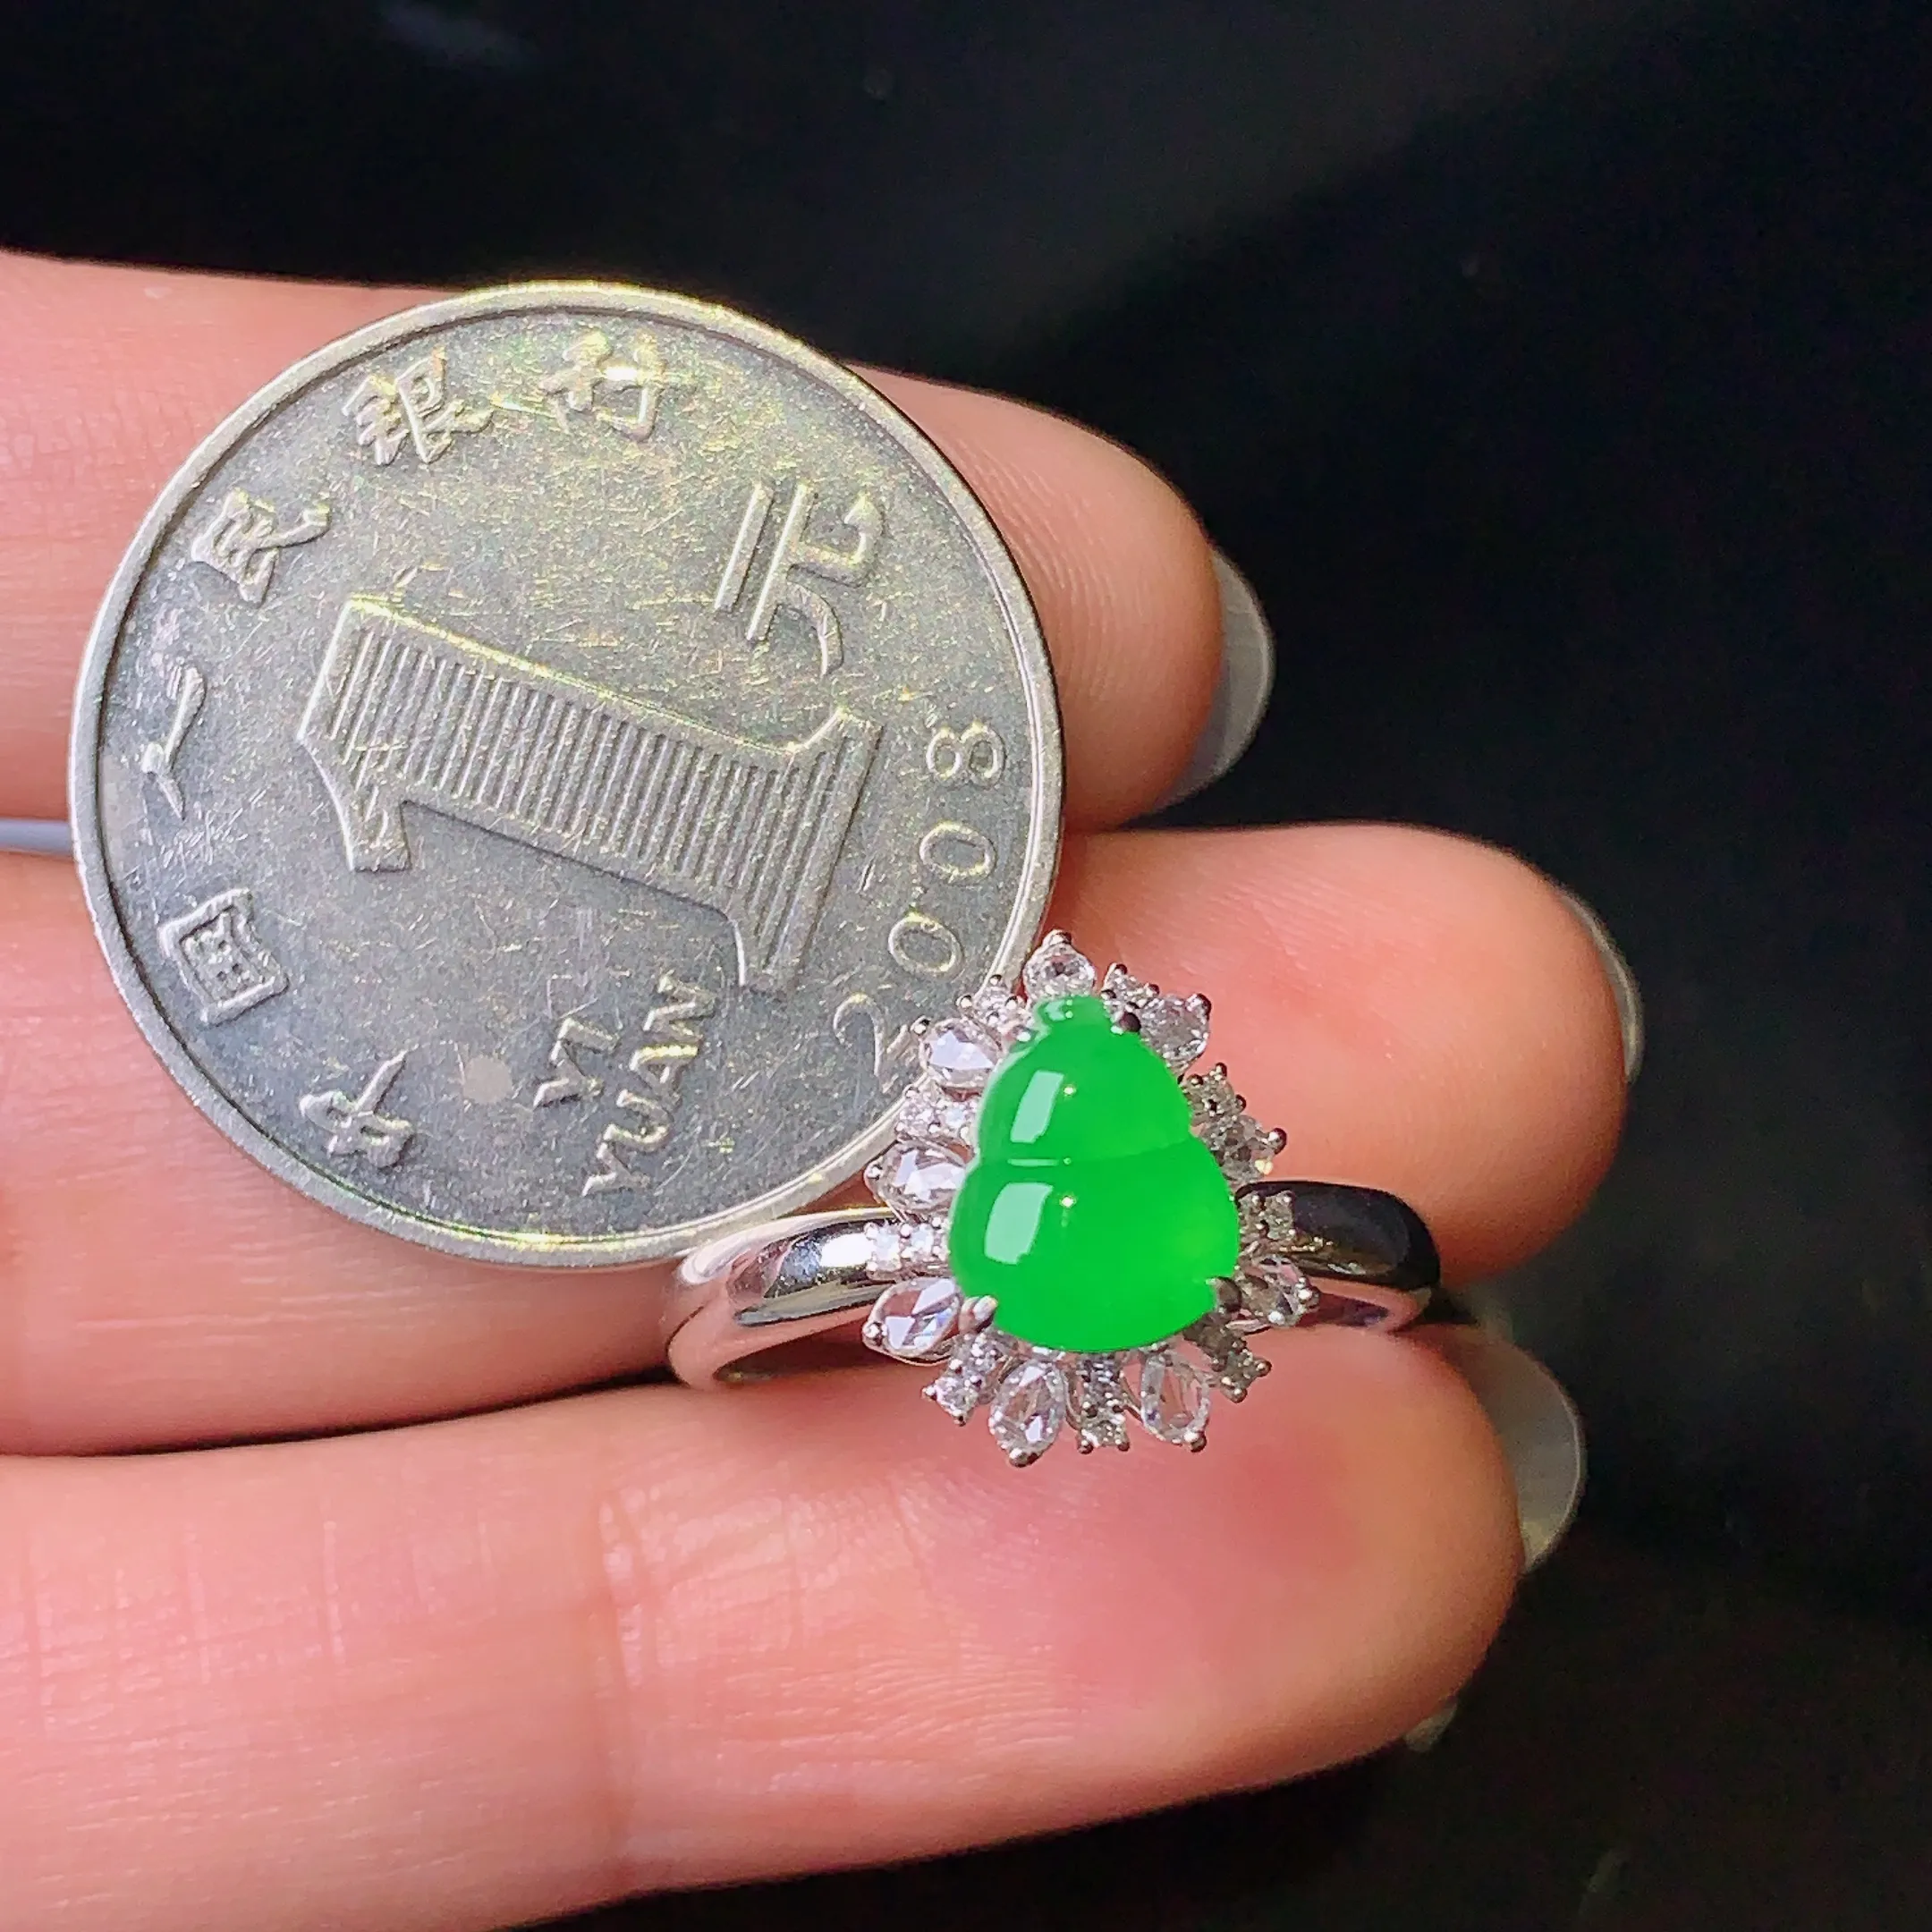 18k金镶嵌满绿葫芦戒指 玉质细腻 色泽艳丽 圈口14 整体尺寸12.2*10.4*8.7